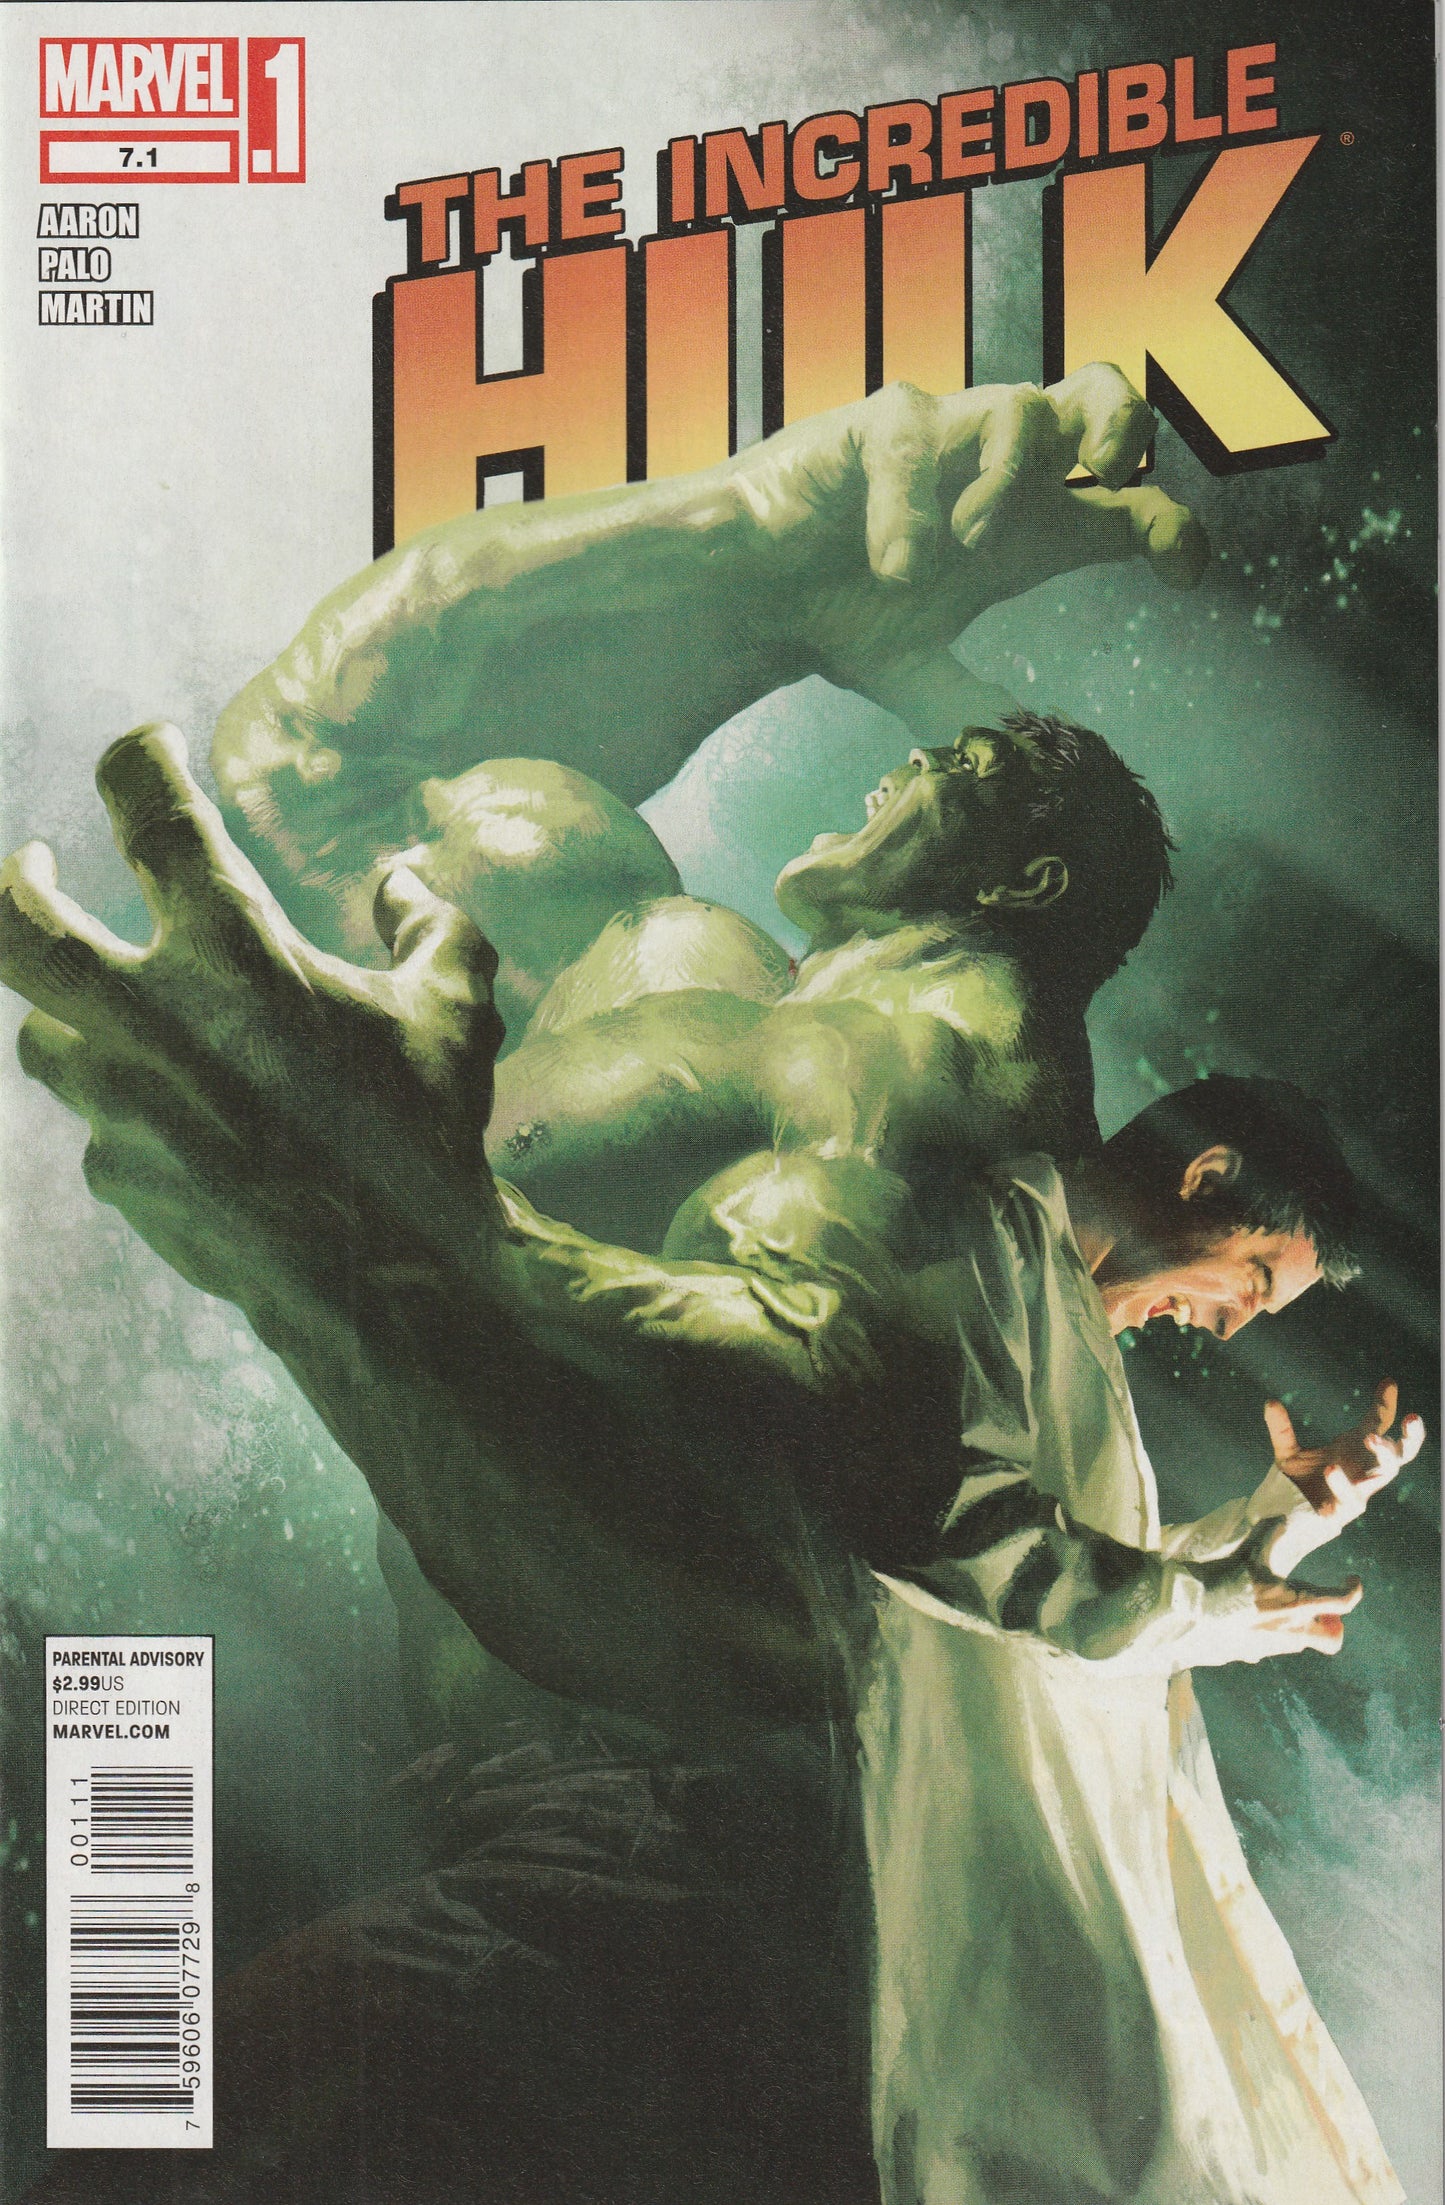 The Incredible Hulk #7.1 (2012)